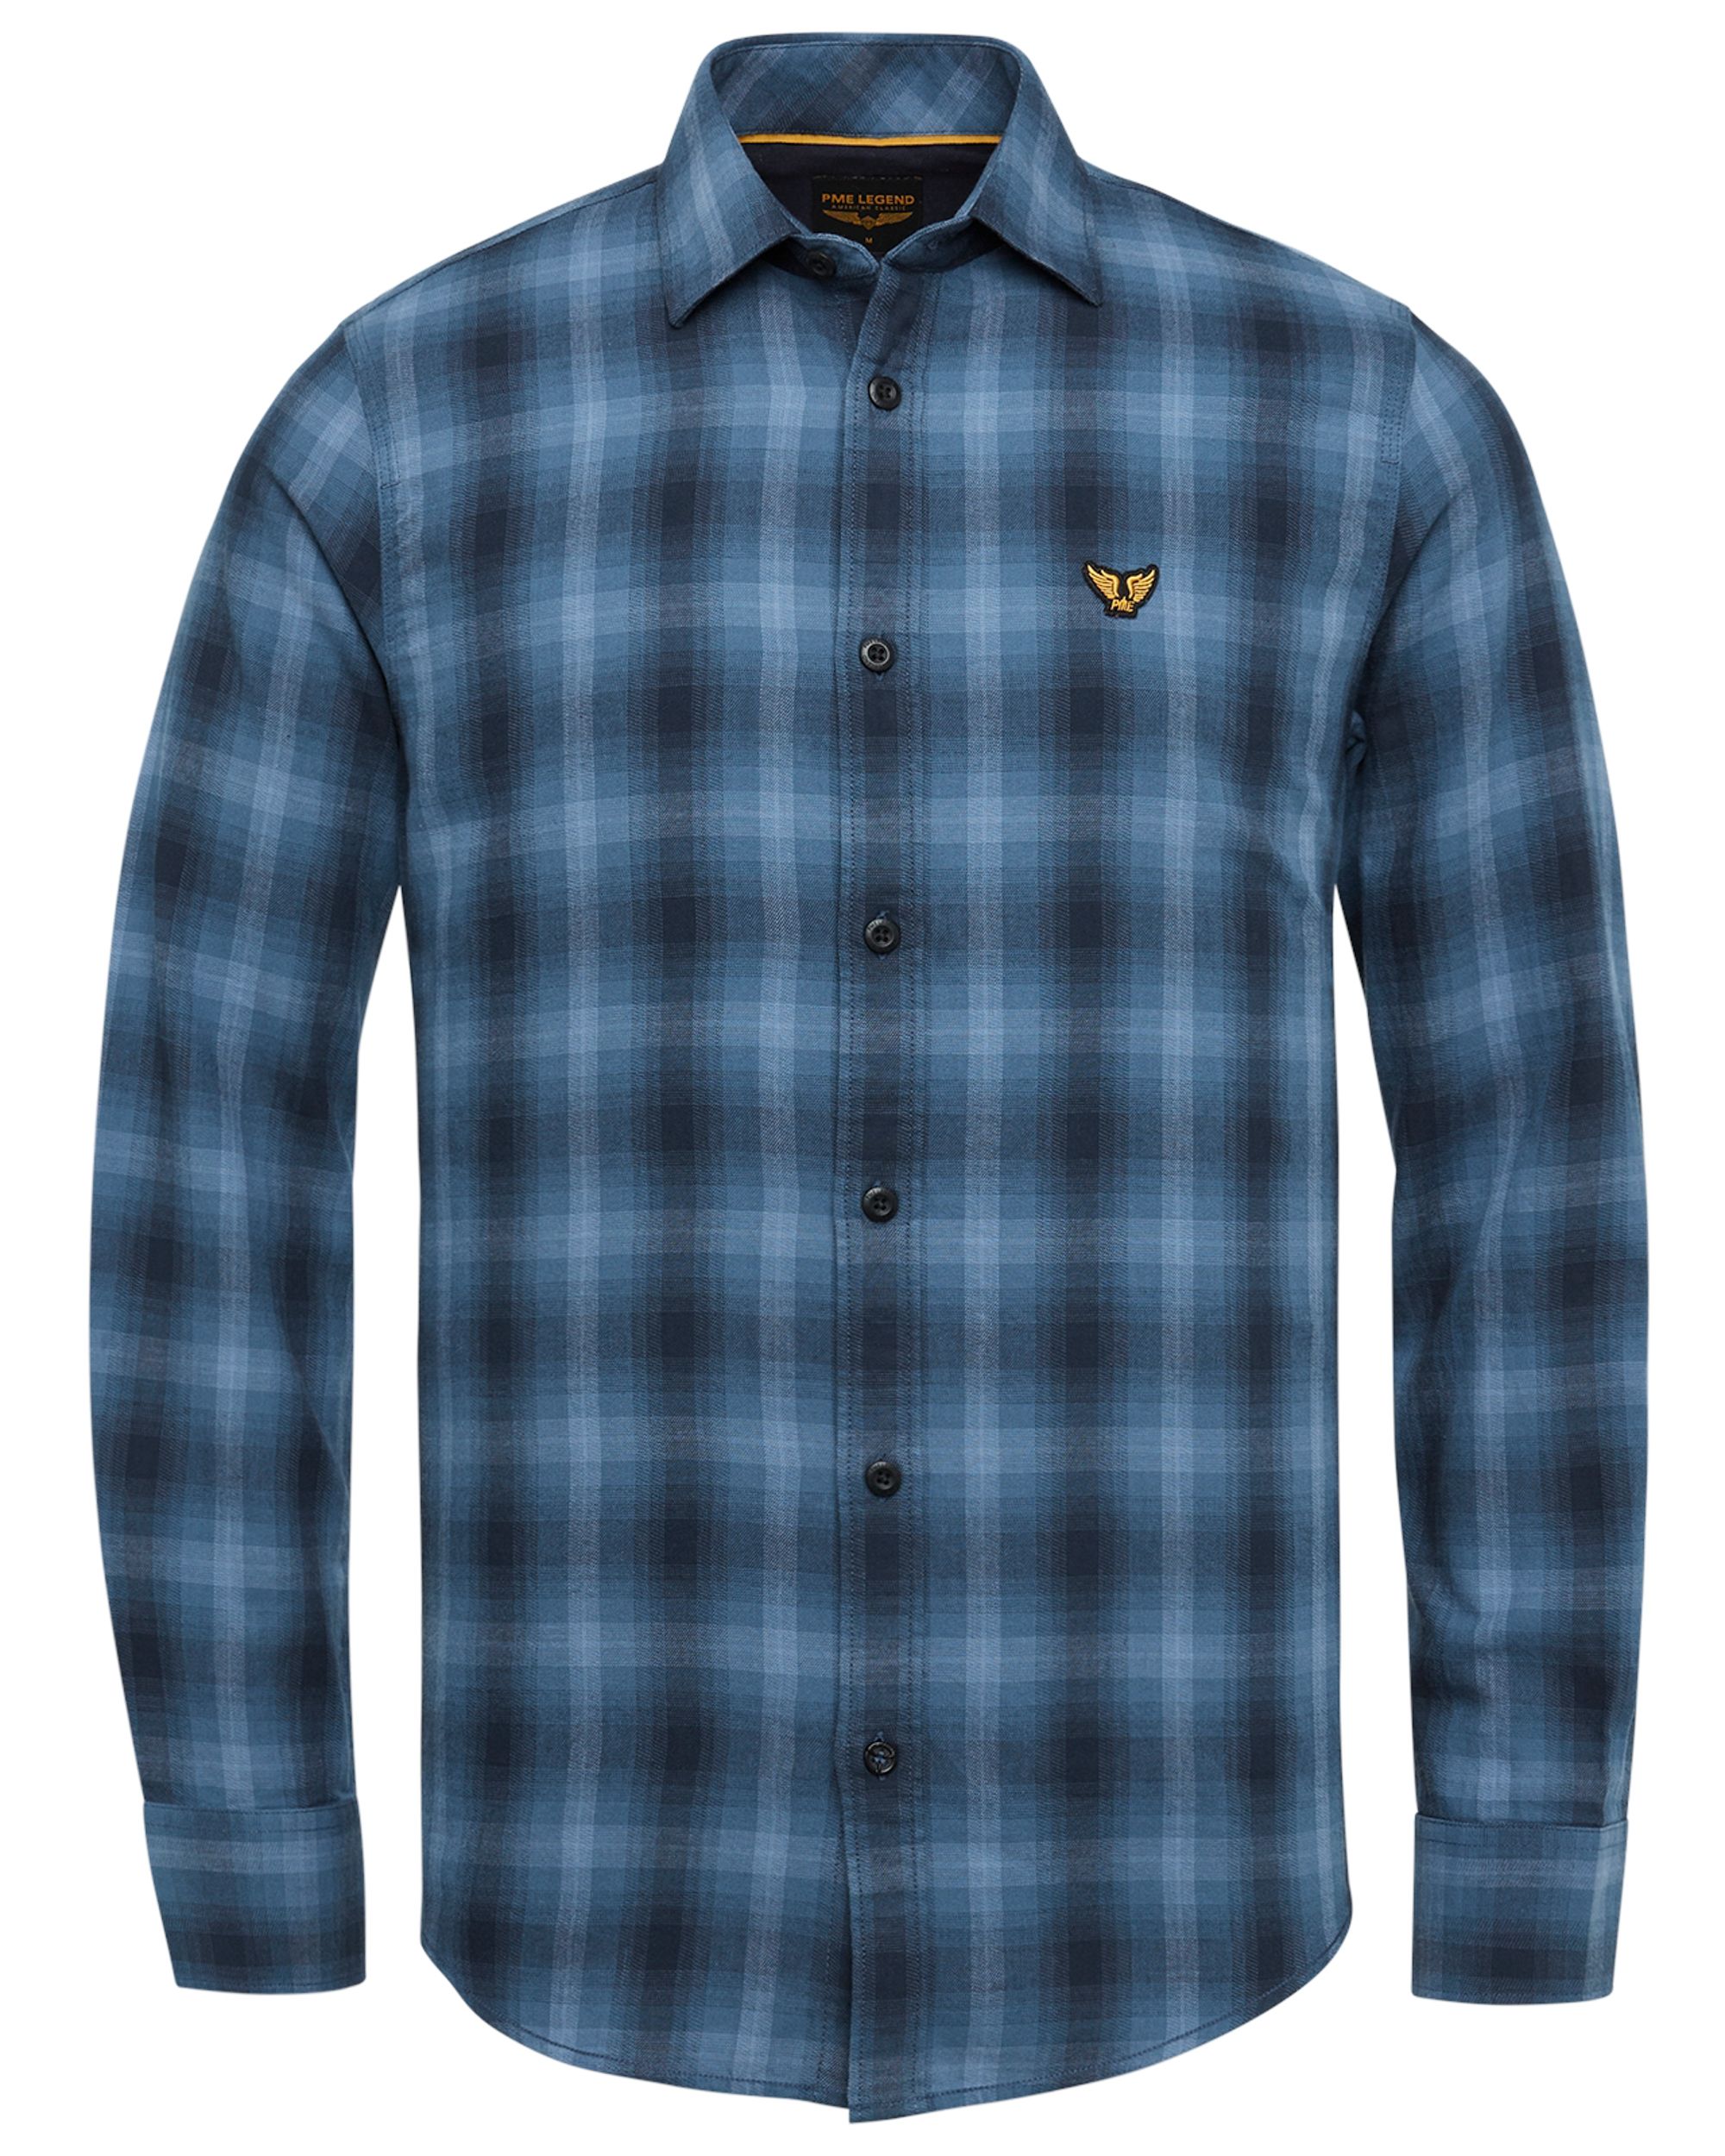 PME Legend Casual Overhemd LM Blauw 082669-001-L